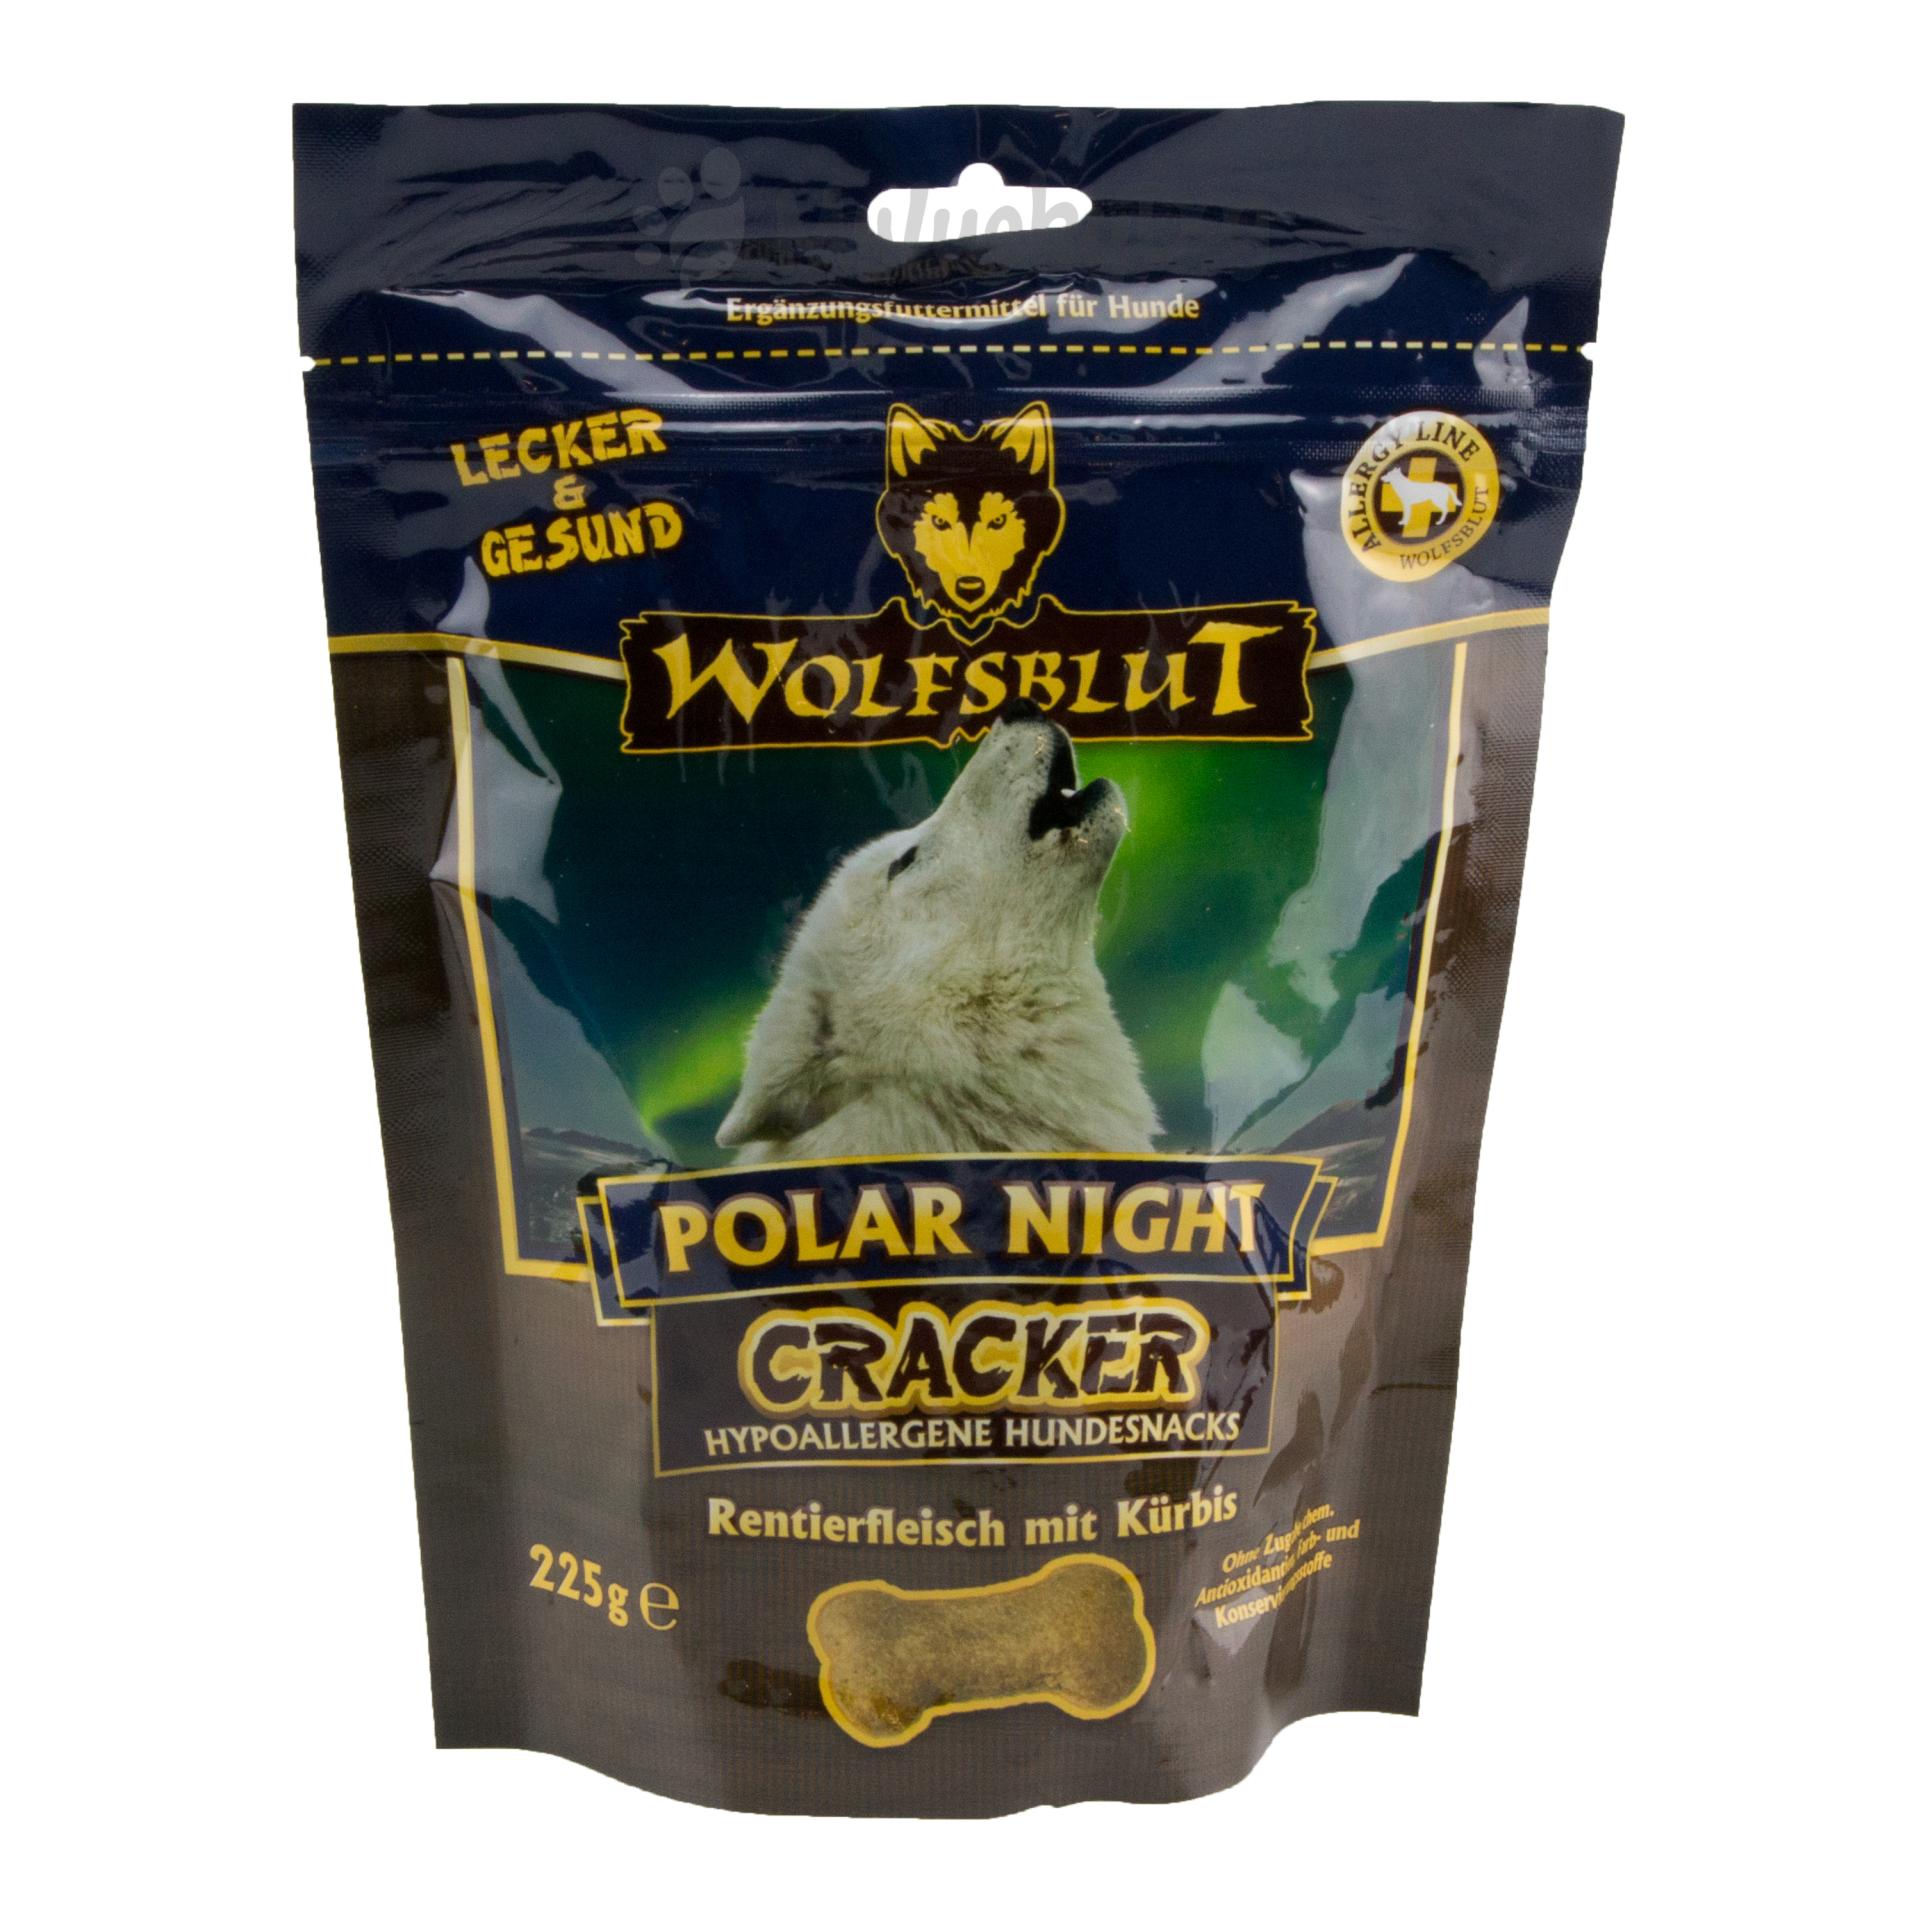 Image of Wolfsblut Cracker Hundesnacks Polar Night mit Rentier 225 g bei Hauptner.ch